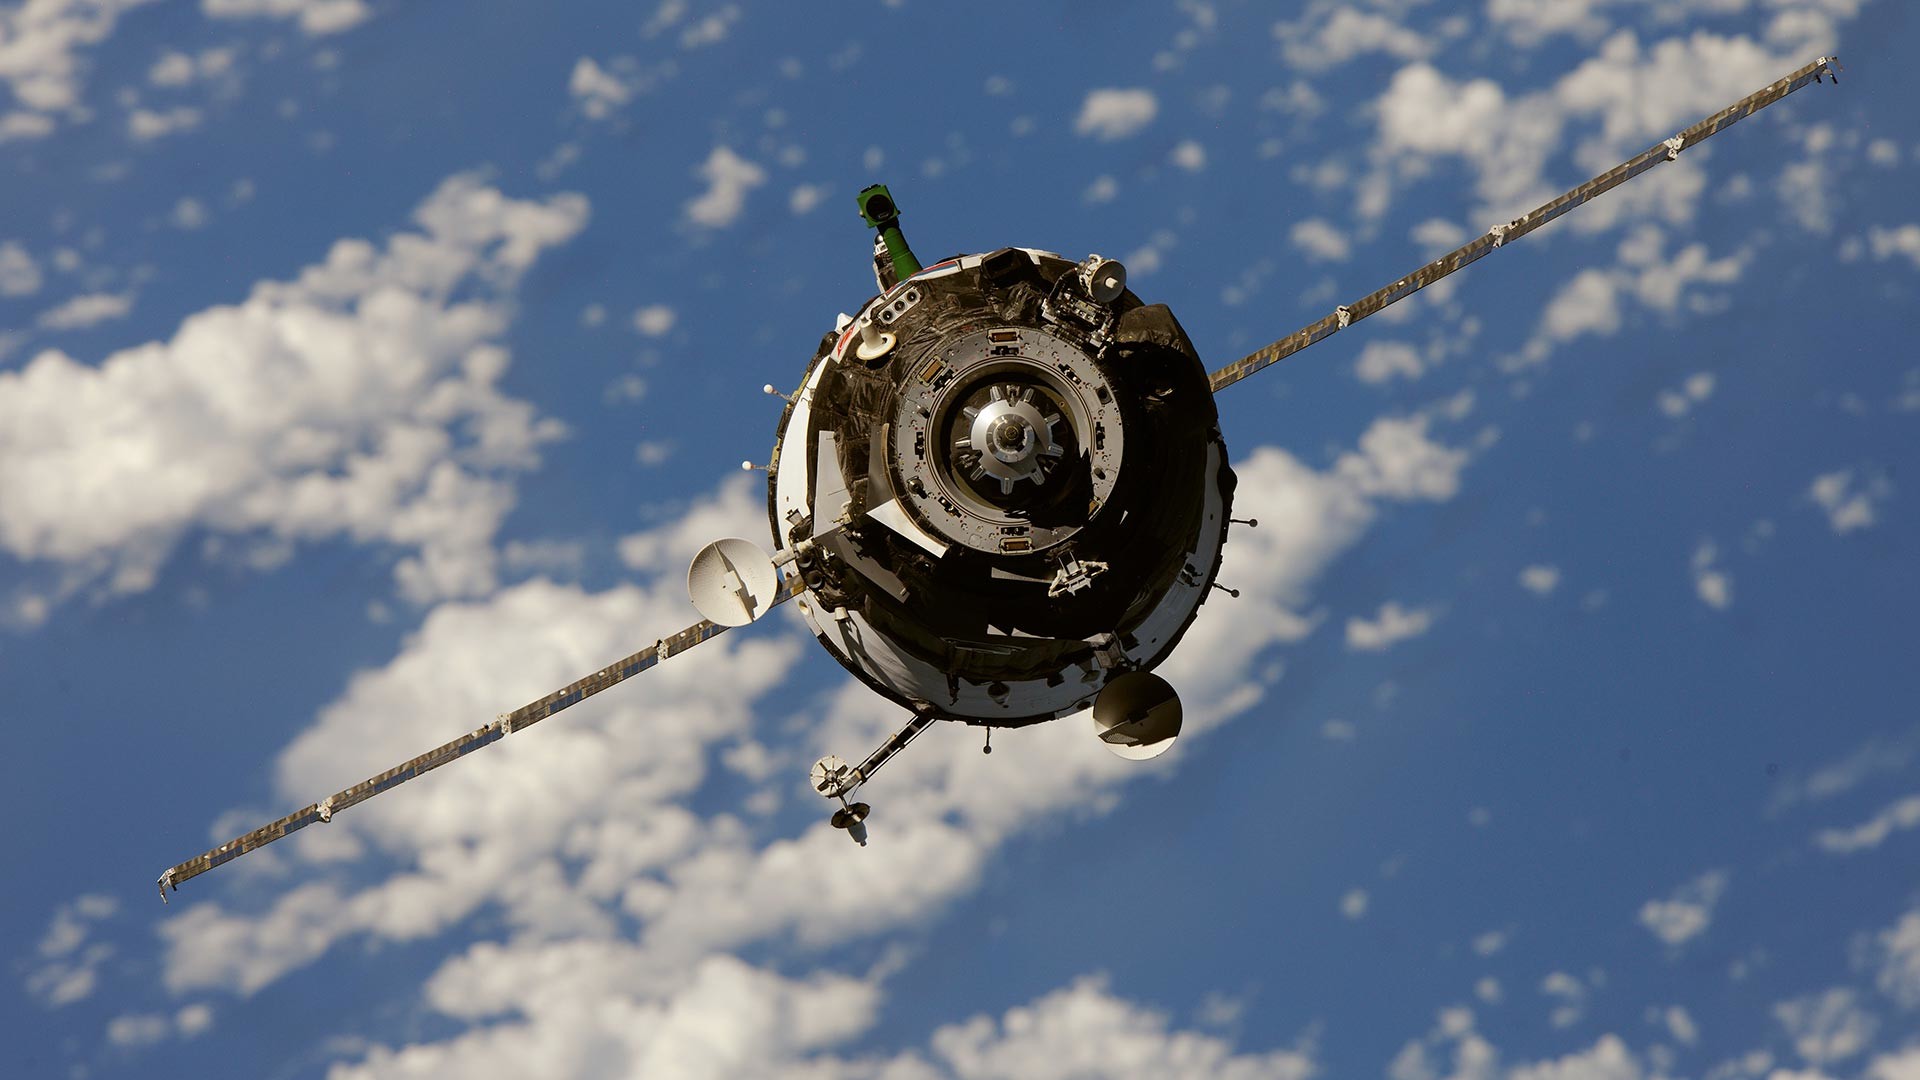 Sojuz TMA-01M

